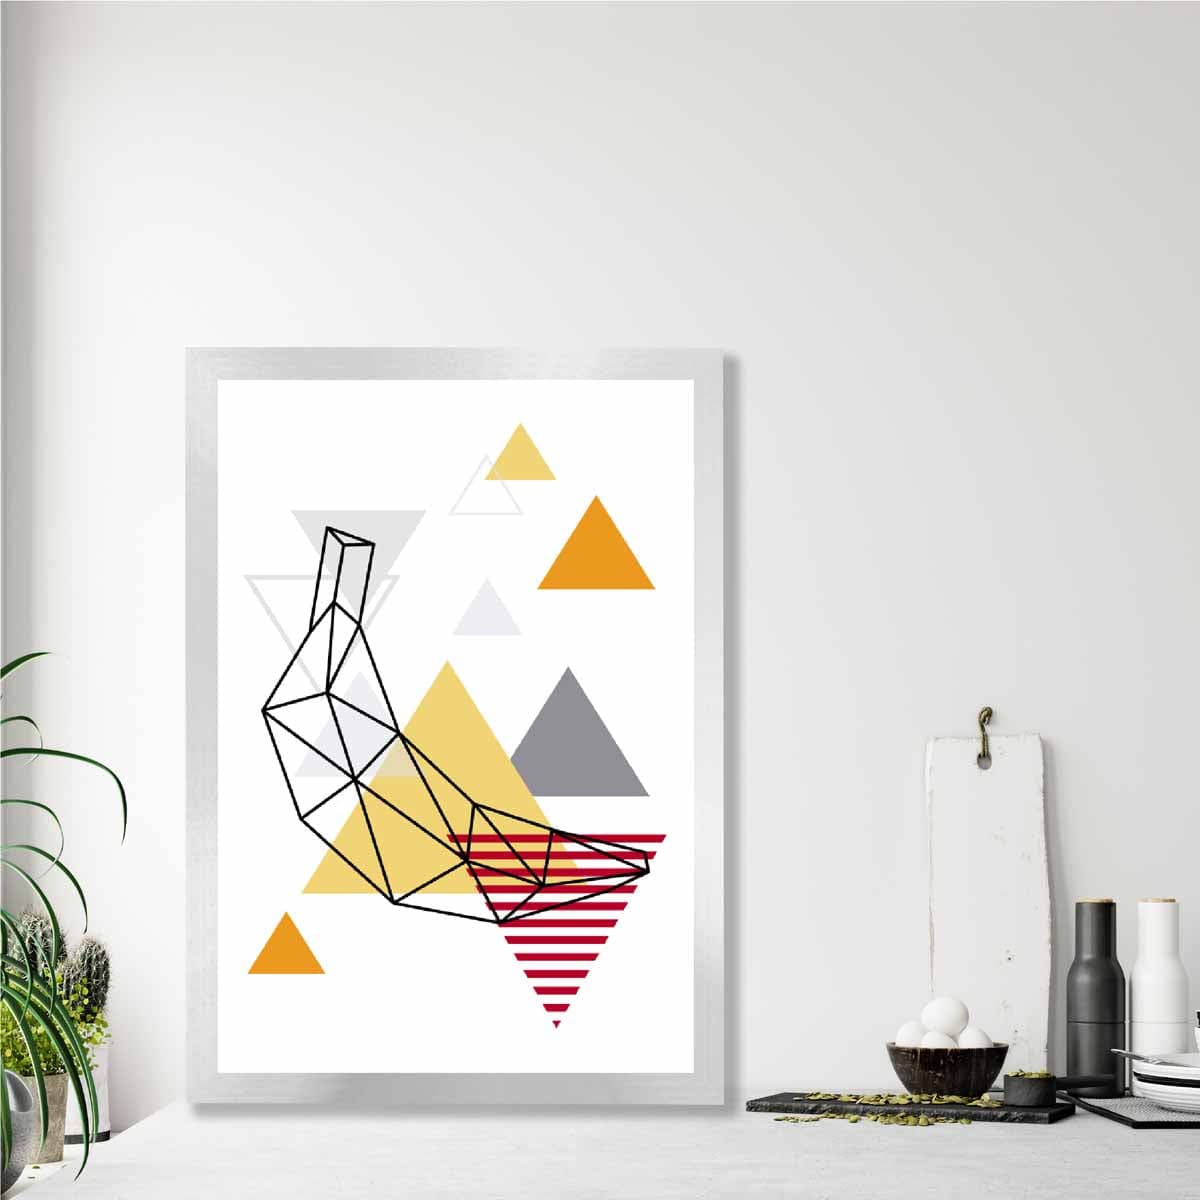 Geometric Fruit Line art Poster of Banana in Orange Red Yellow